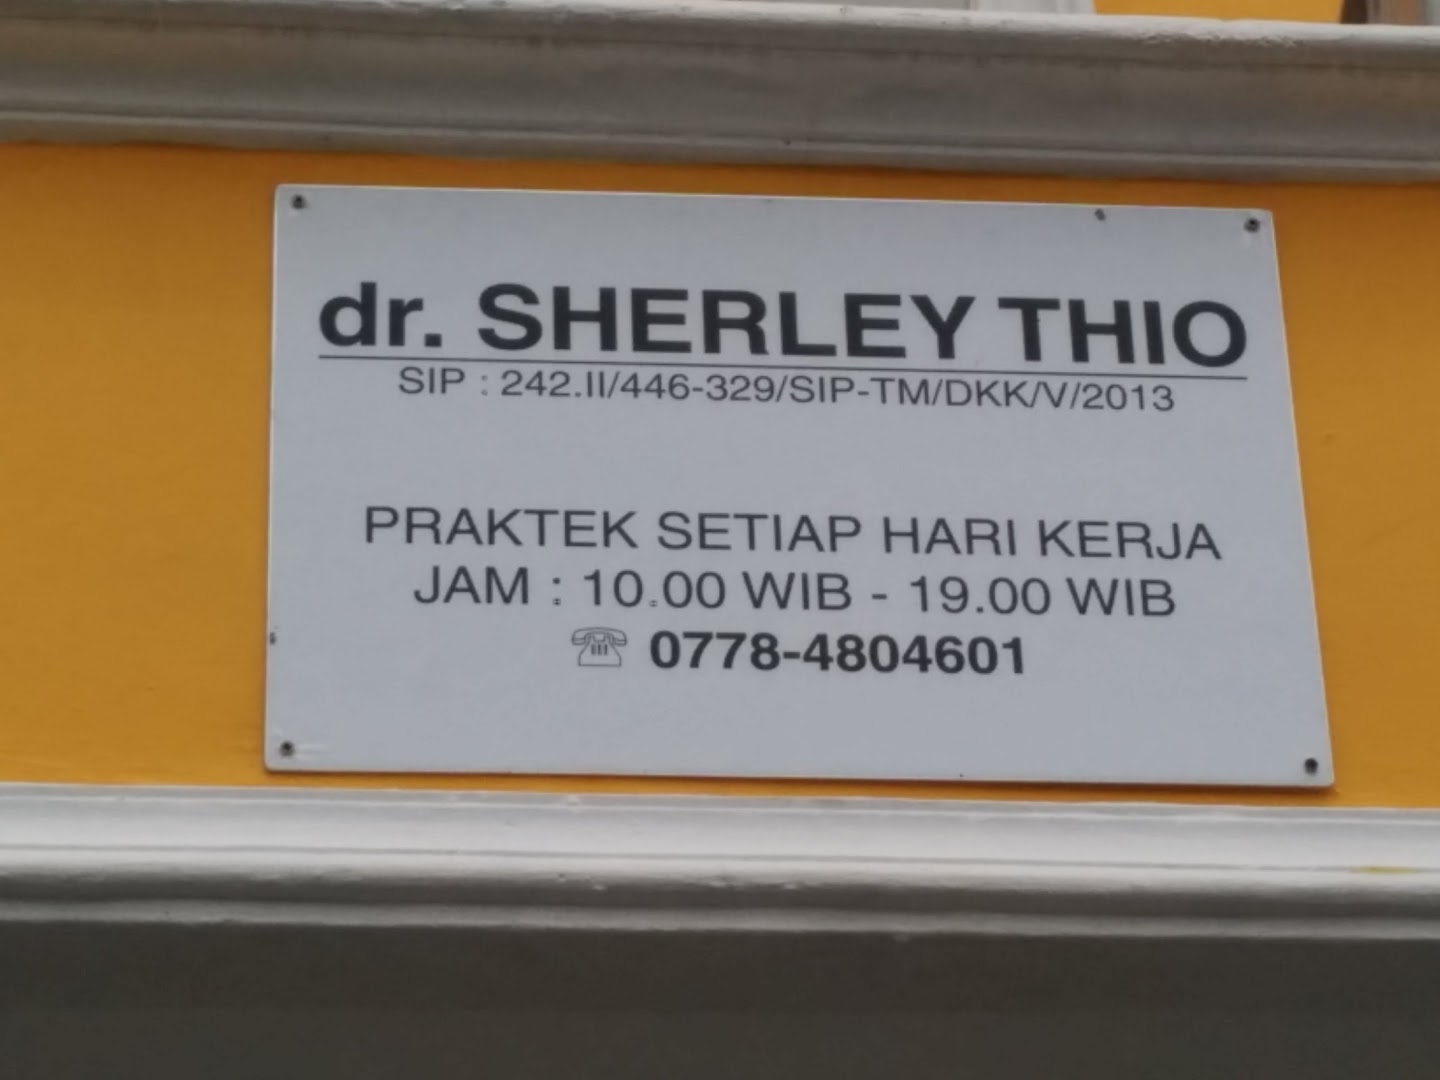 Dr. Sherley Thio Photo